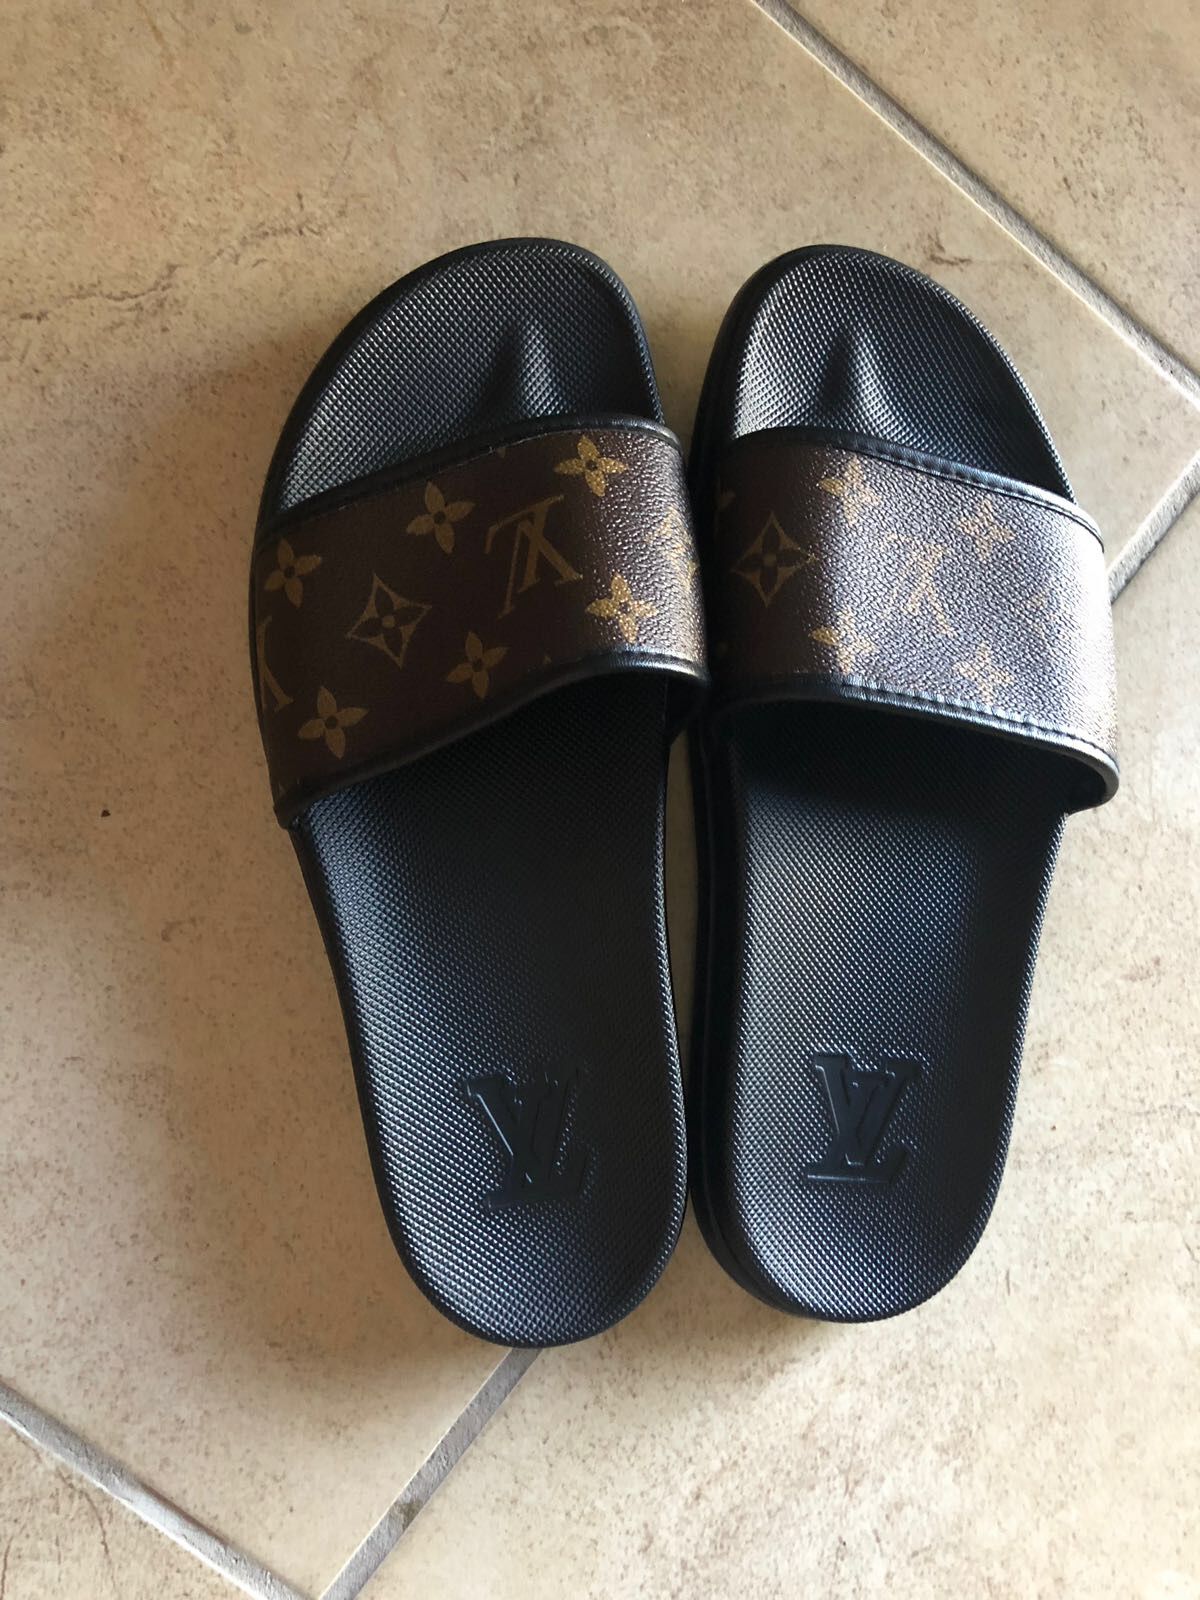 Louis Vuitton Waterfront Mule Sandals for Sale in Miramar, FL - OfferUp